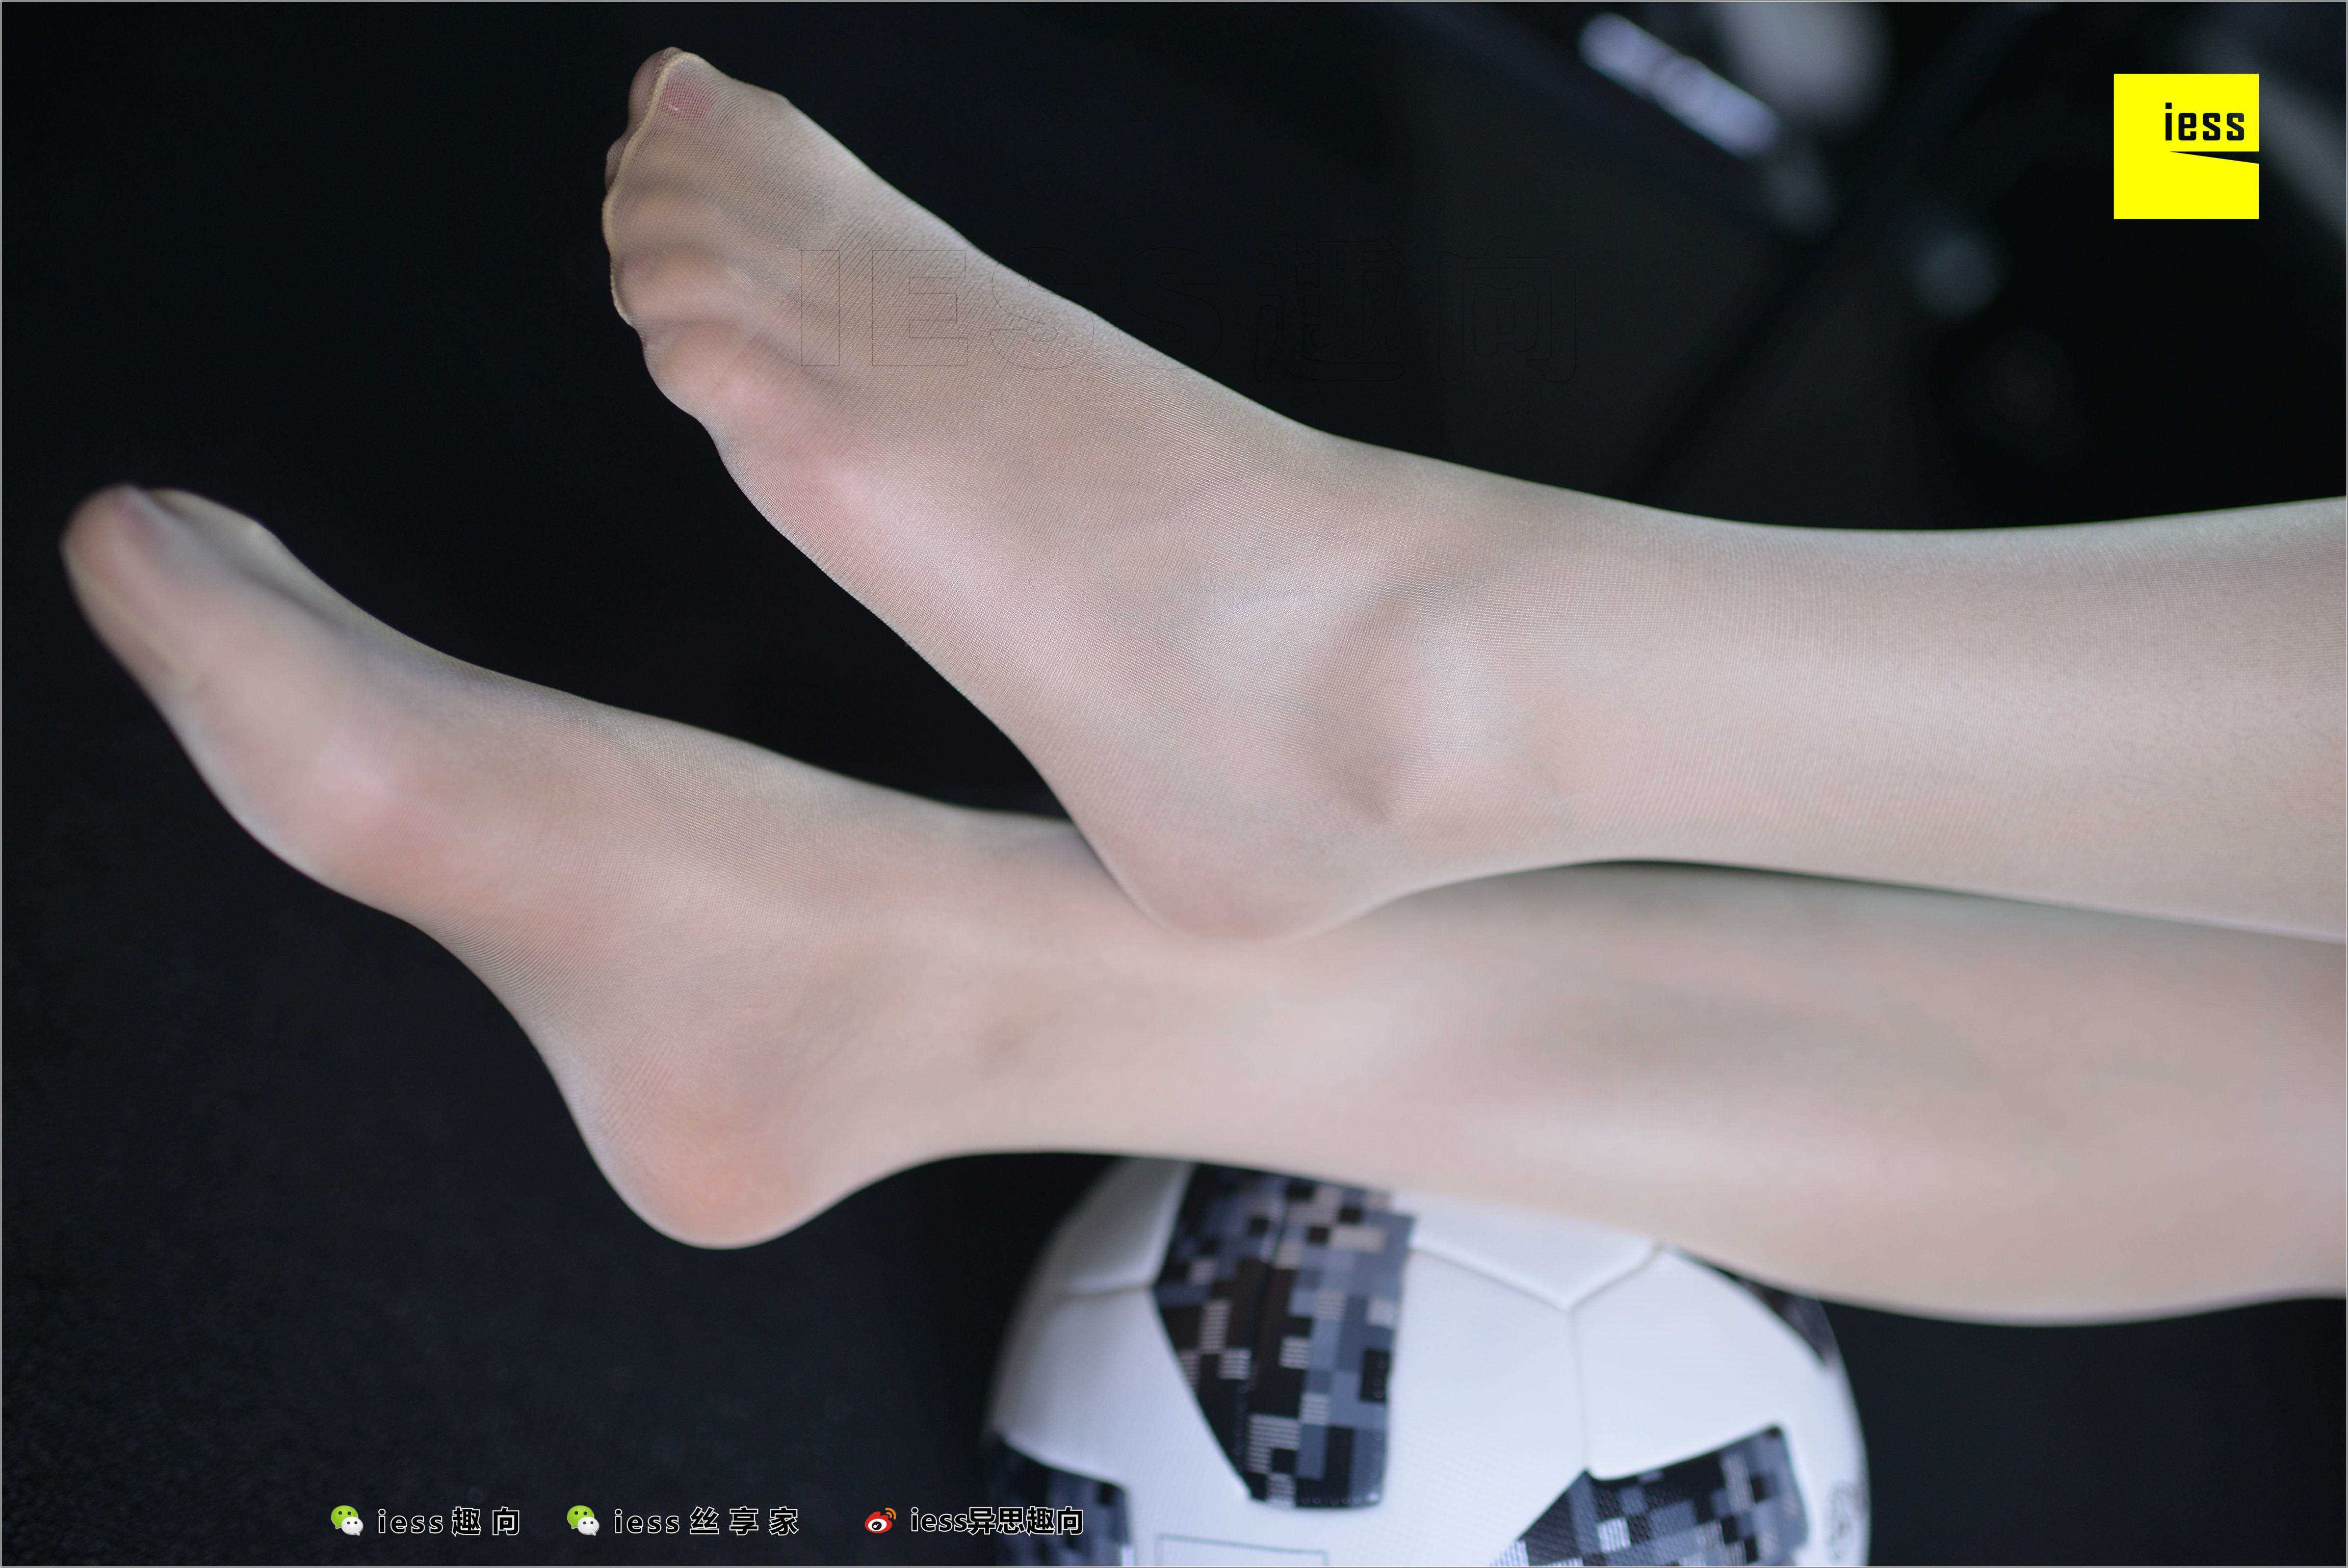 China Beauty Legs and feet 525